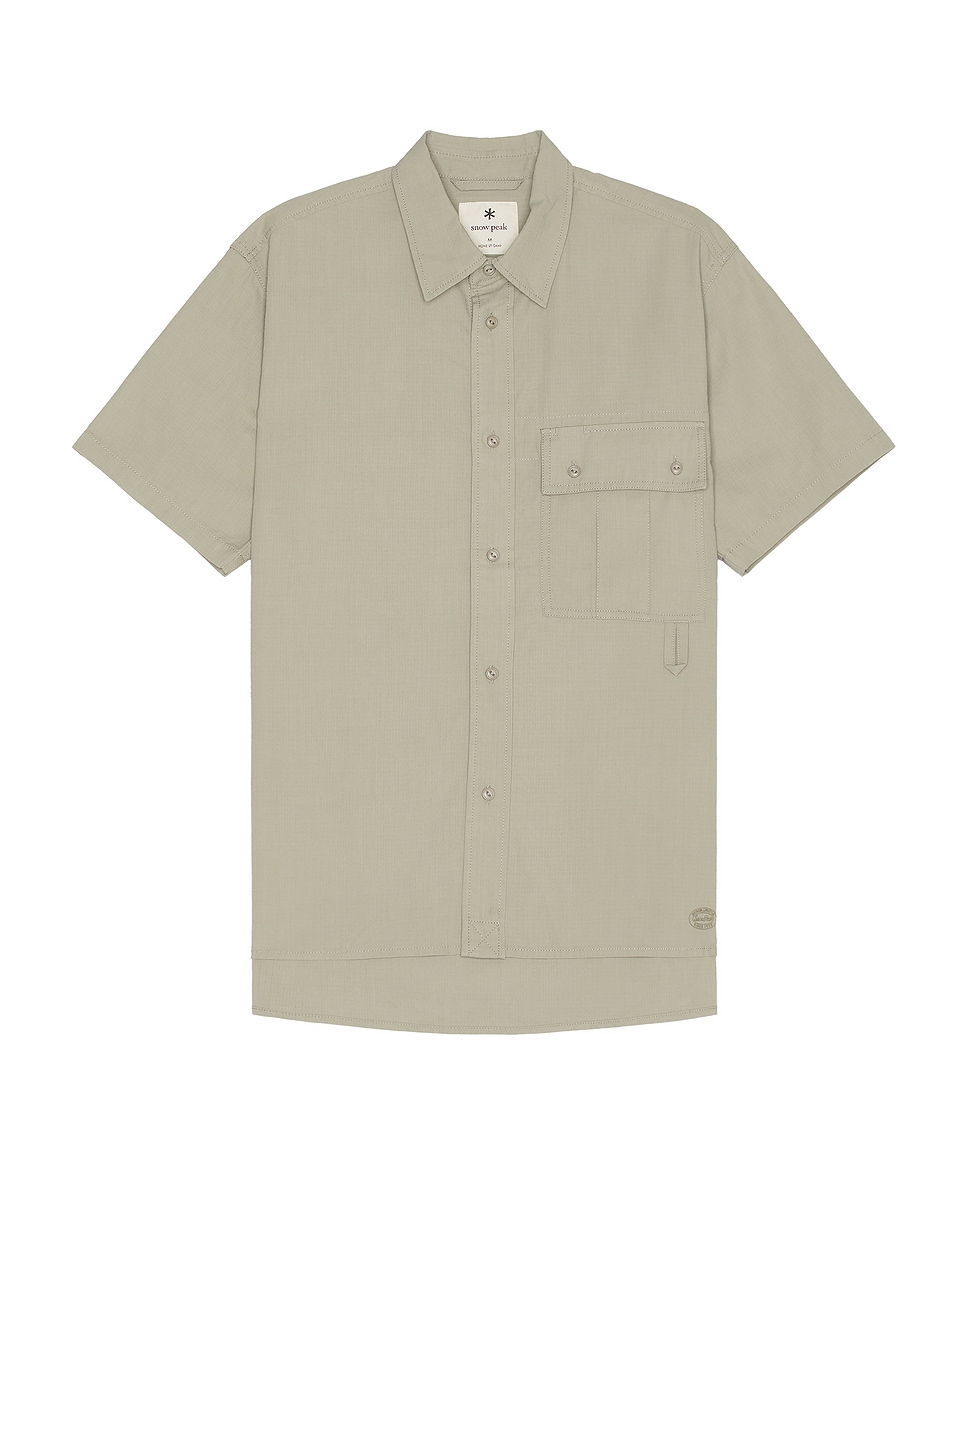 Takibi Light Ripstop Short Sleeve Shirt in Sage